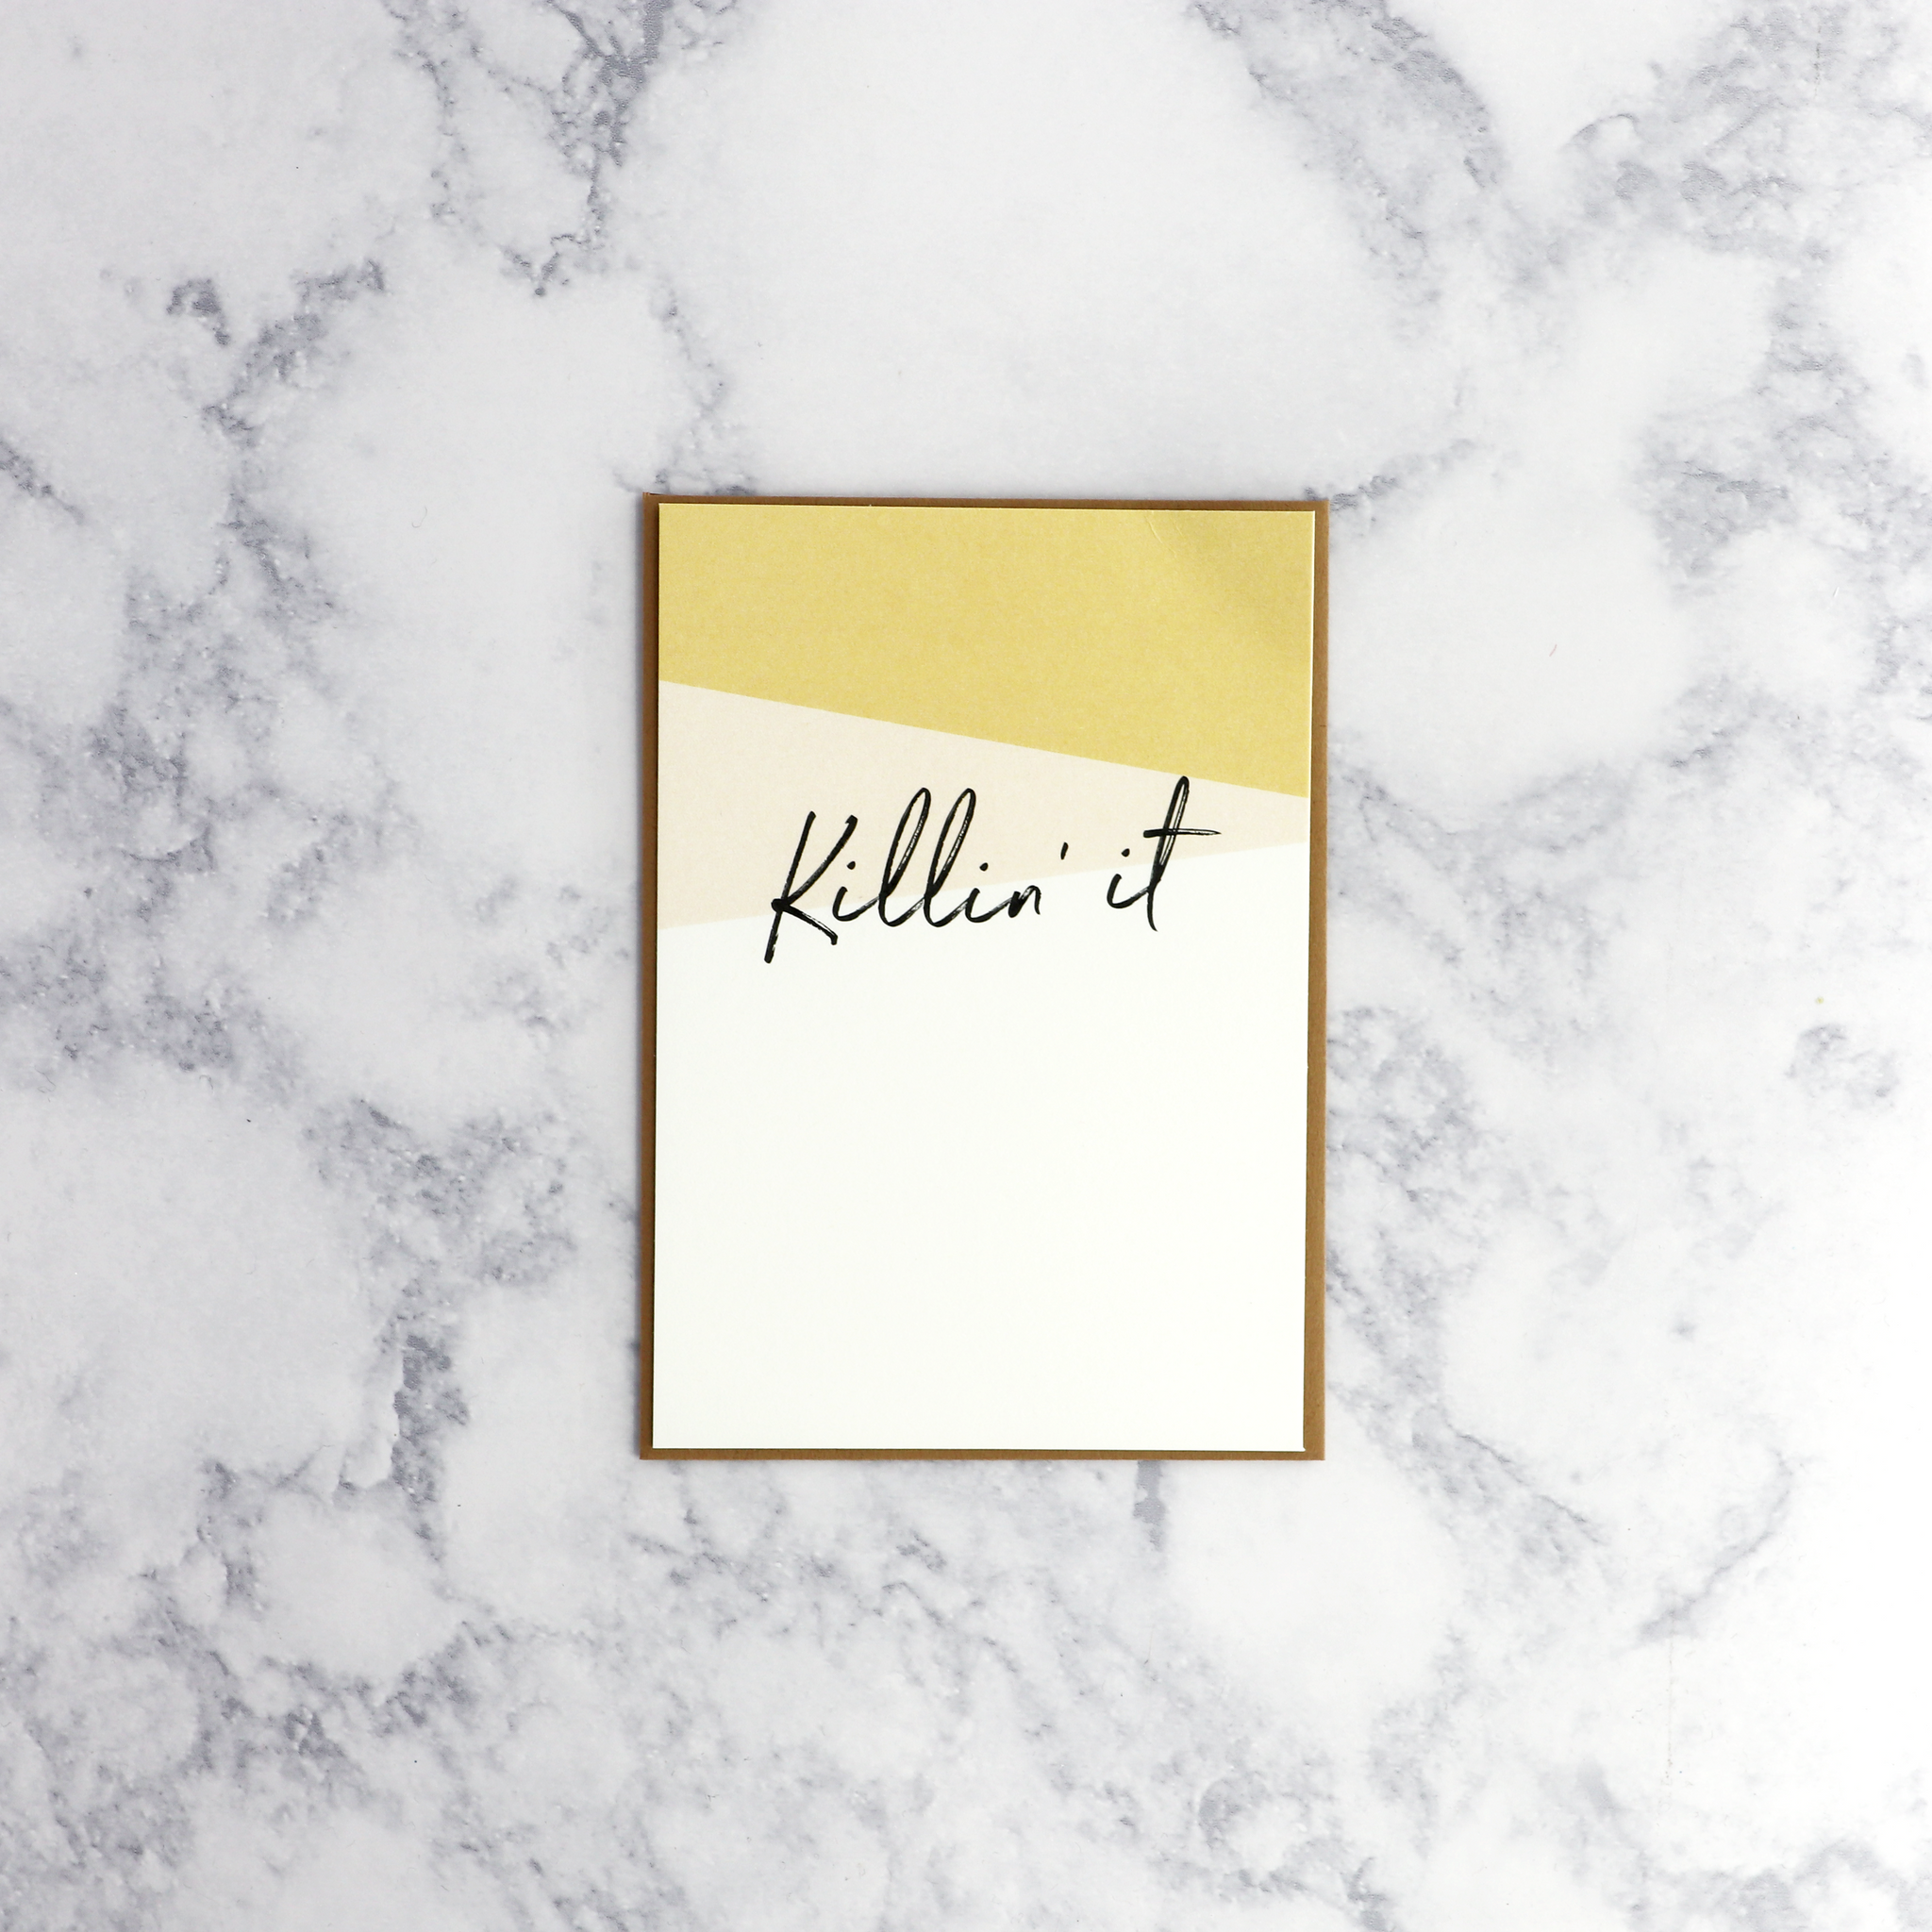 Color Block "Killin’ It" Encouragement Card